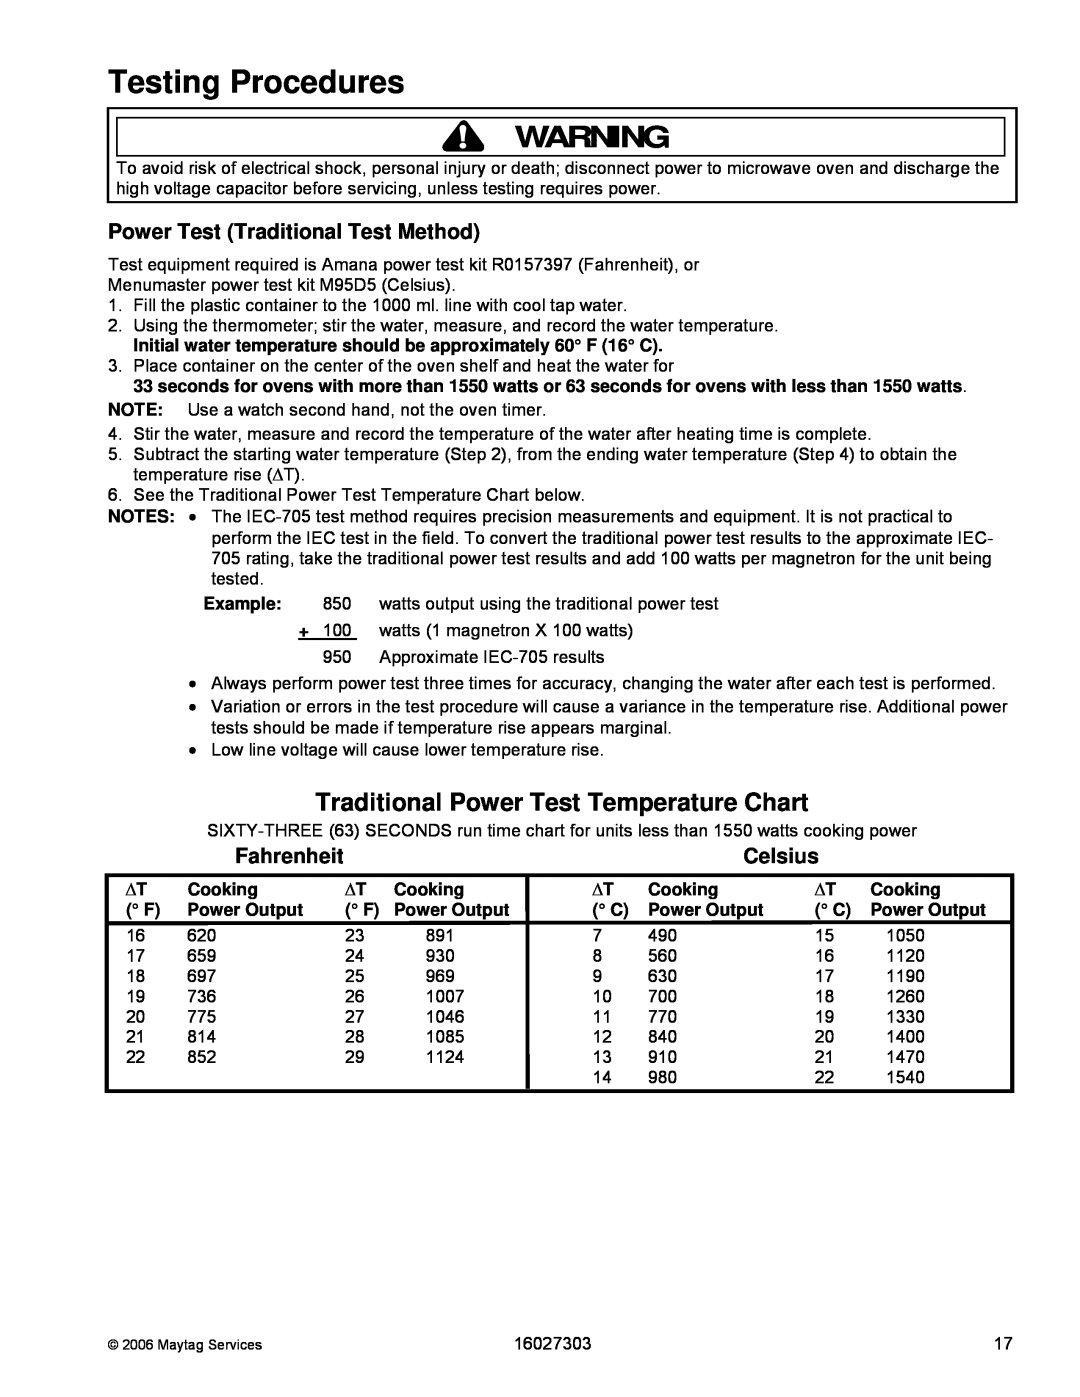 Maytag UMV1152CA manual Traditional Power Test Temperature Chart, Power Test Traditional Test Method, Fahrenheit, Celsius 